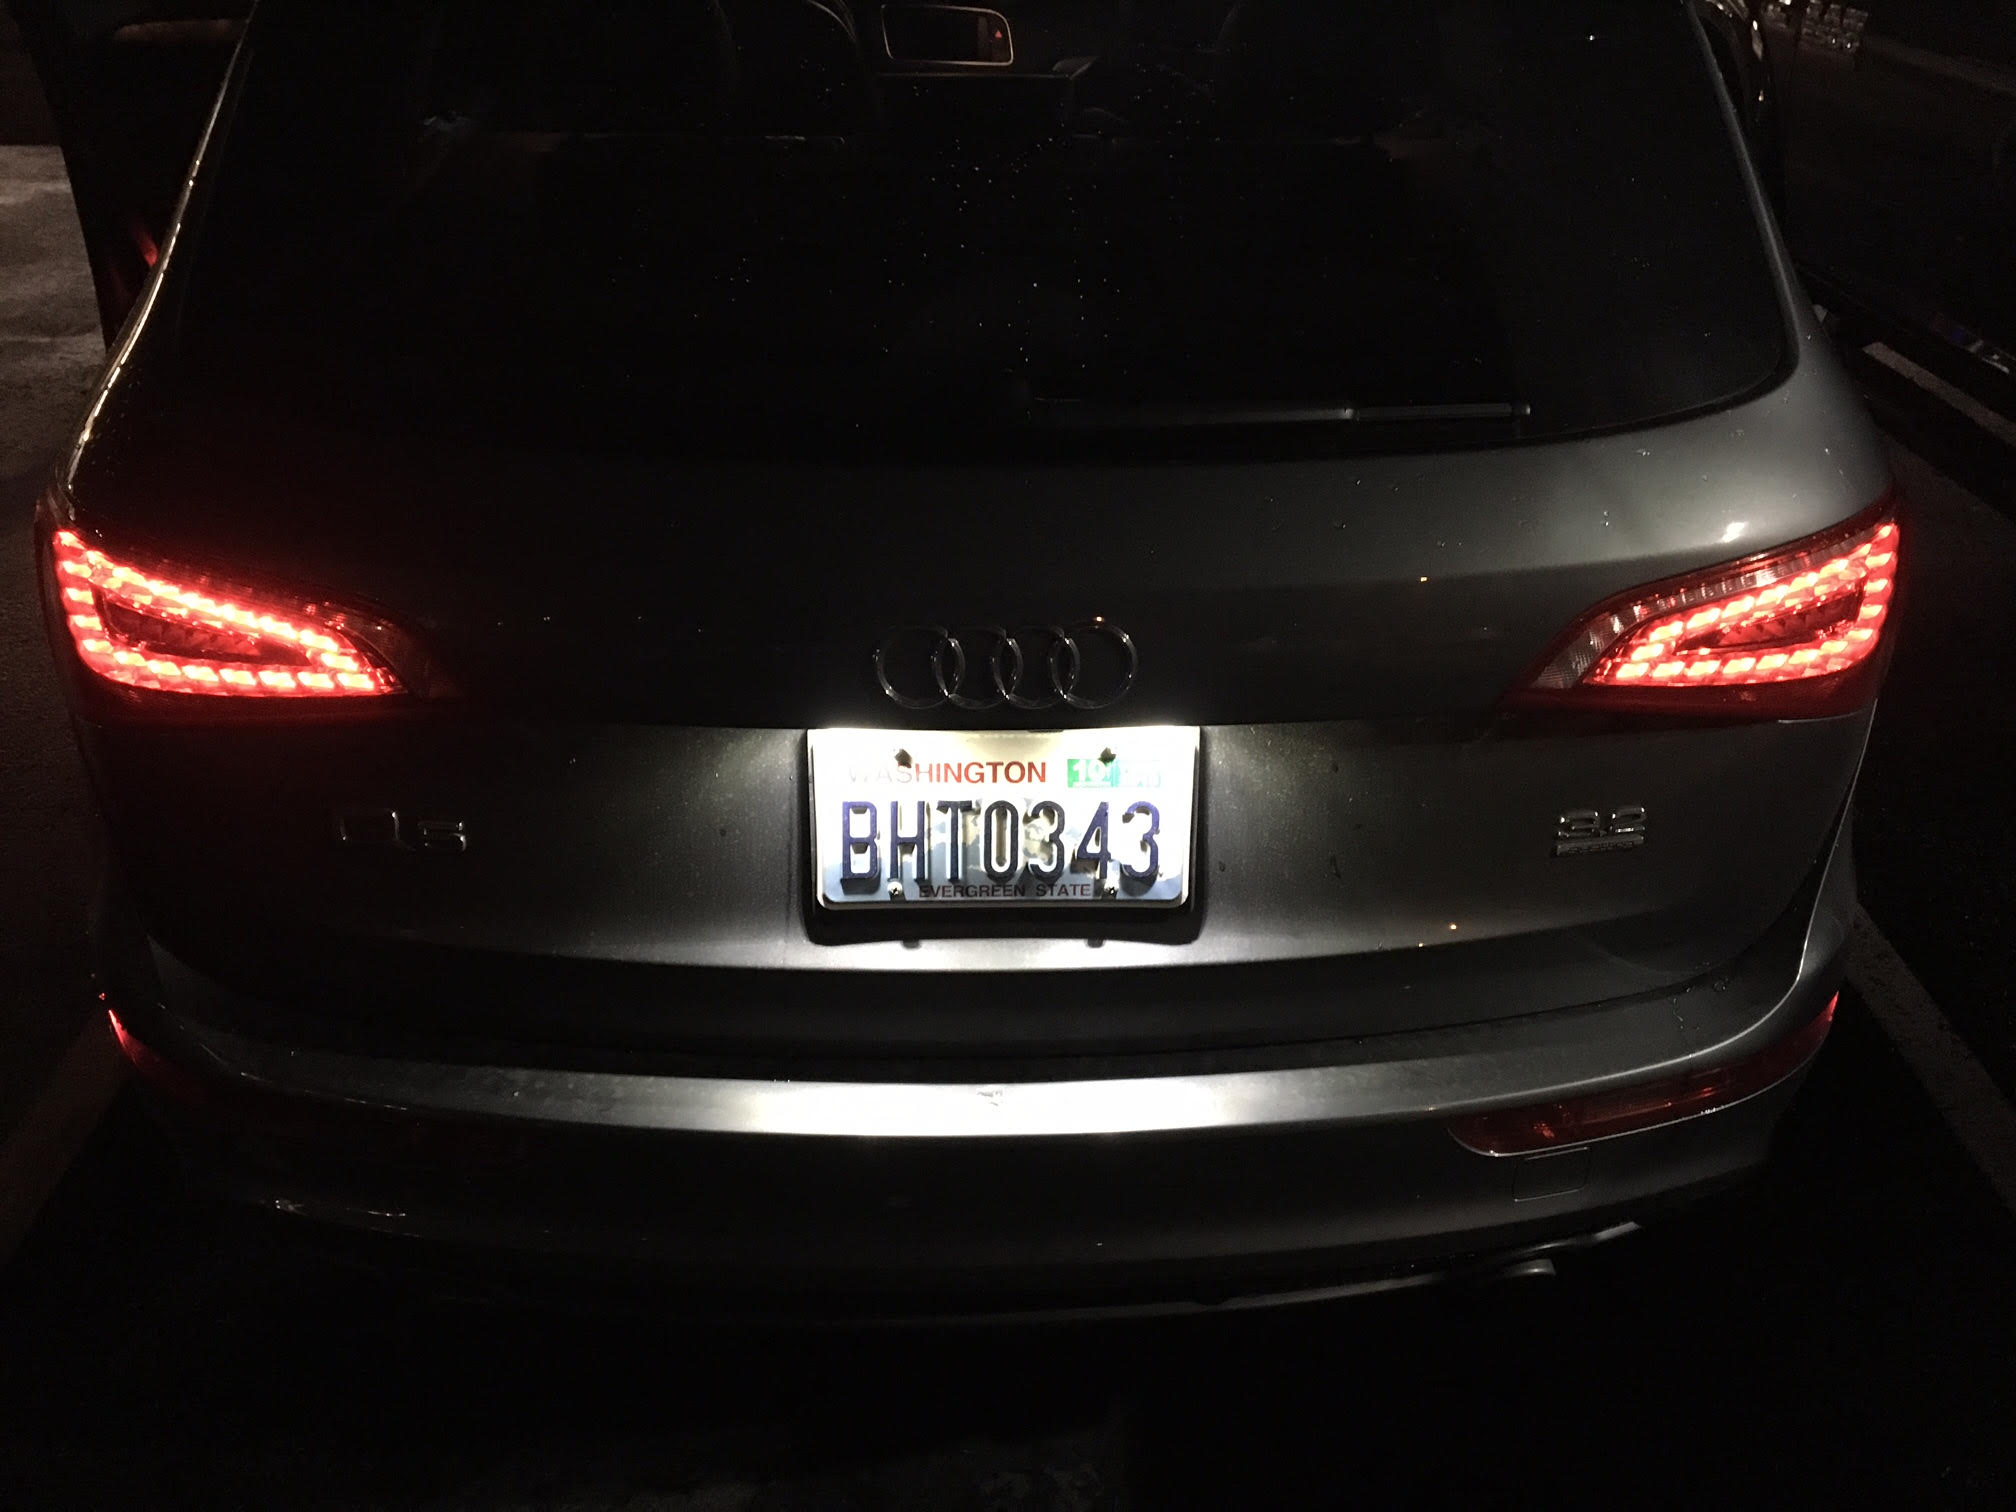 https://hidkitpros.com/wp-content/uploads/2017/12/Audi-Q5-LED-License-Plate-Lights.jpg